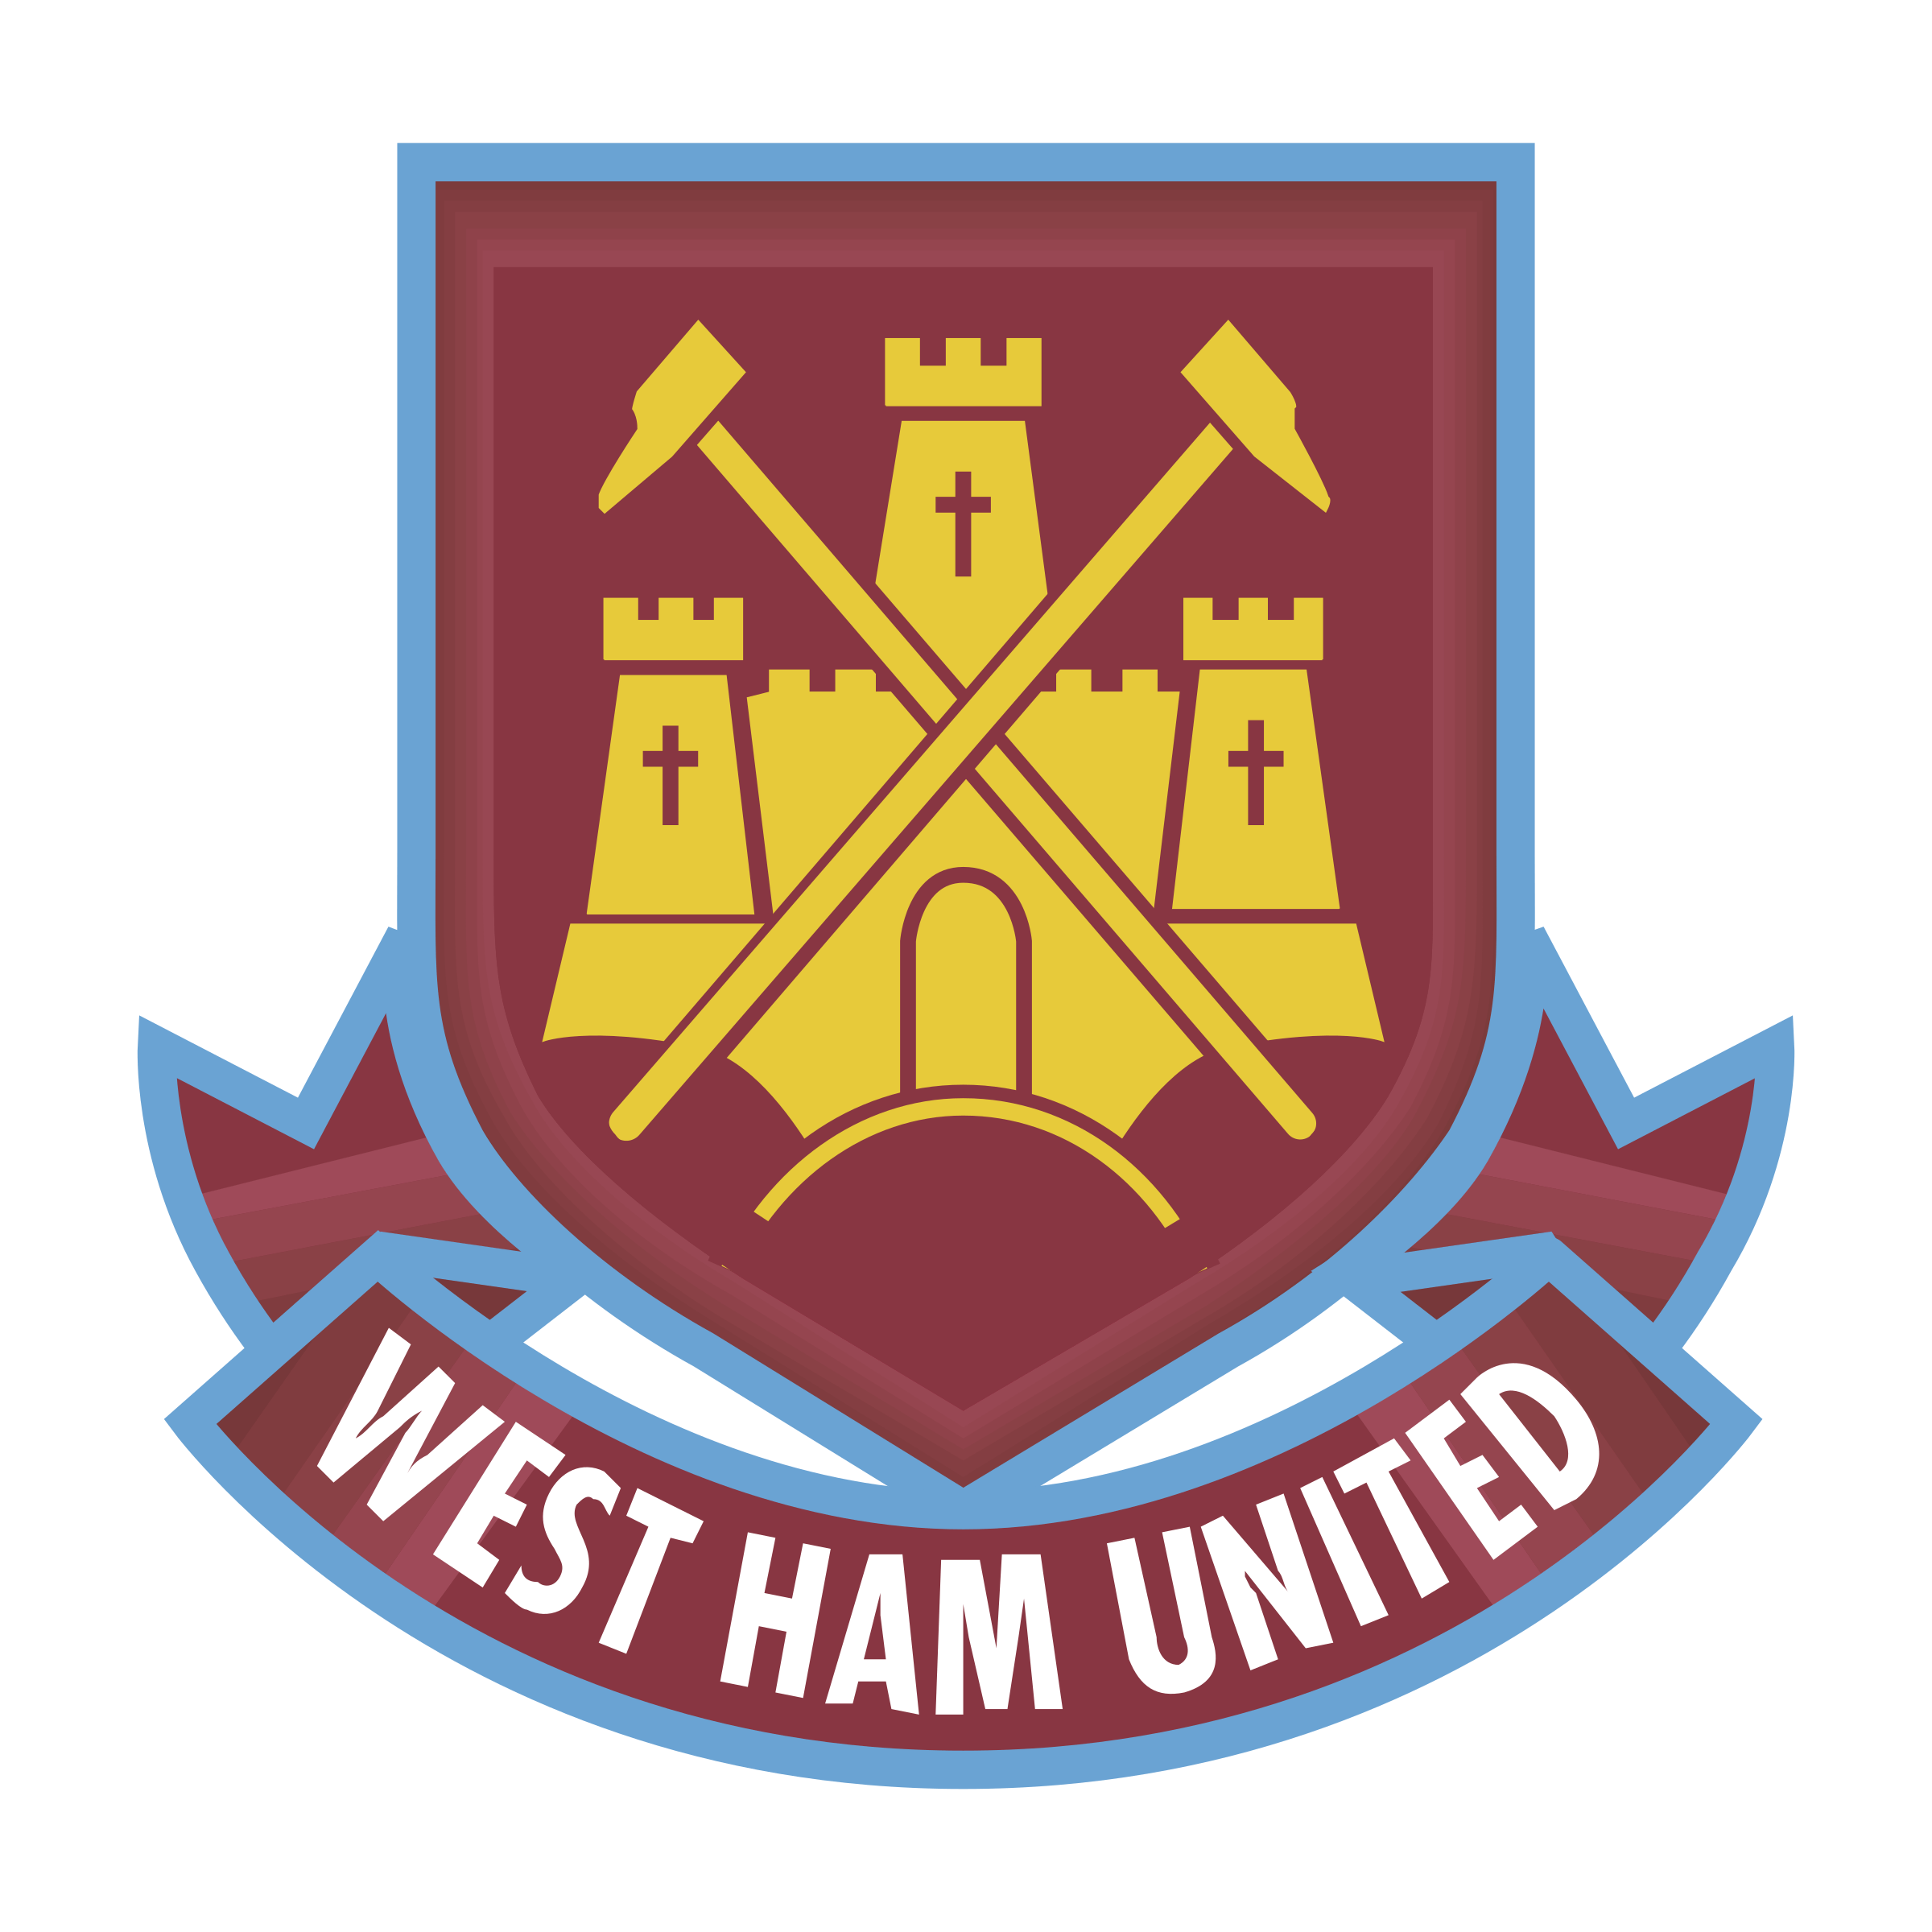 Ham Logo - West Ham United FC Logo PNG Transparent & SVG Vector - Freebie Supply